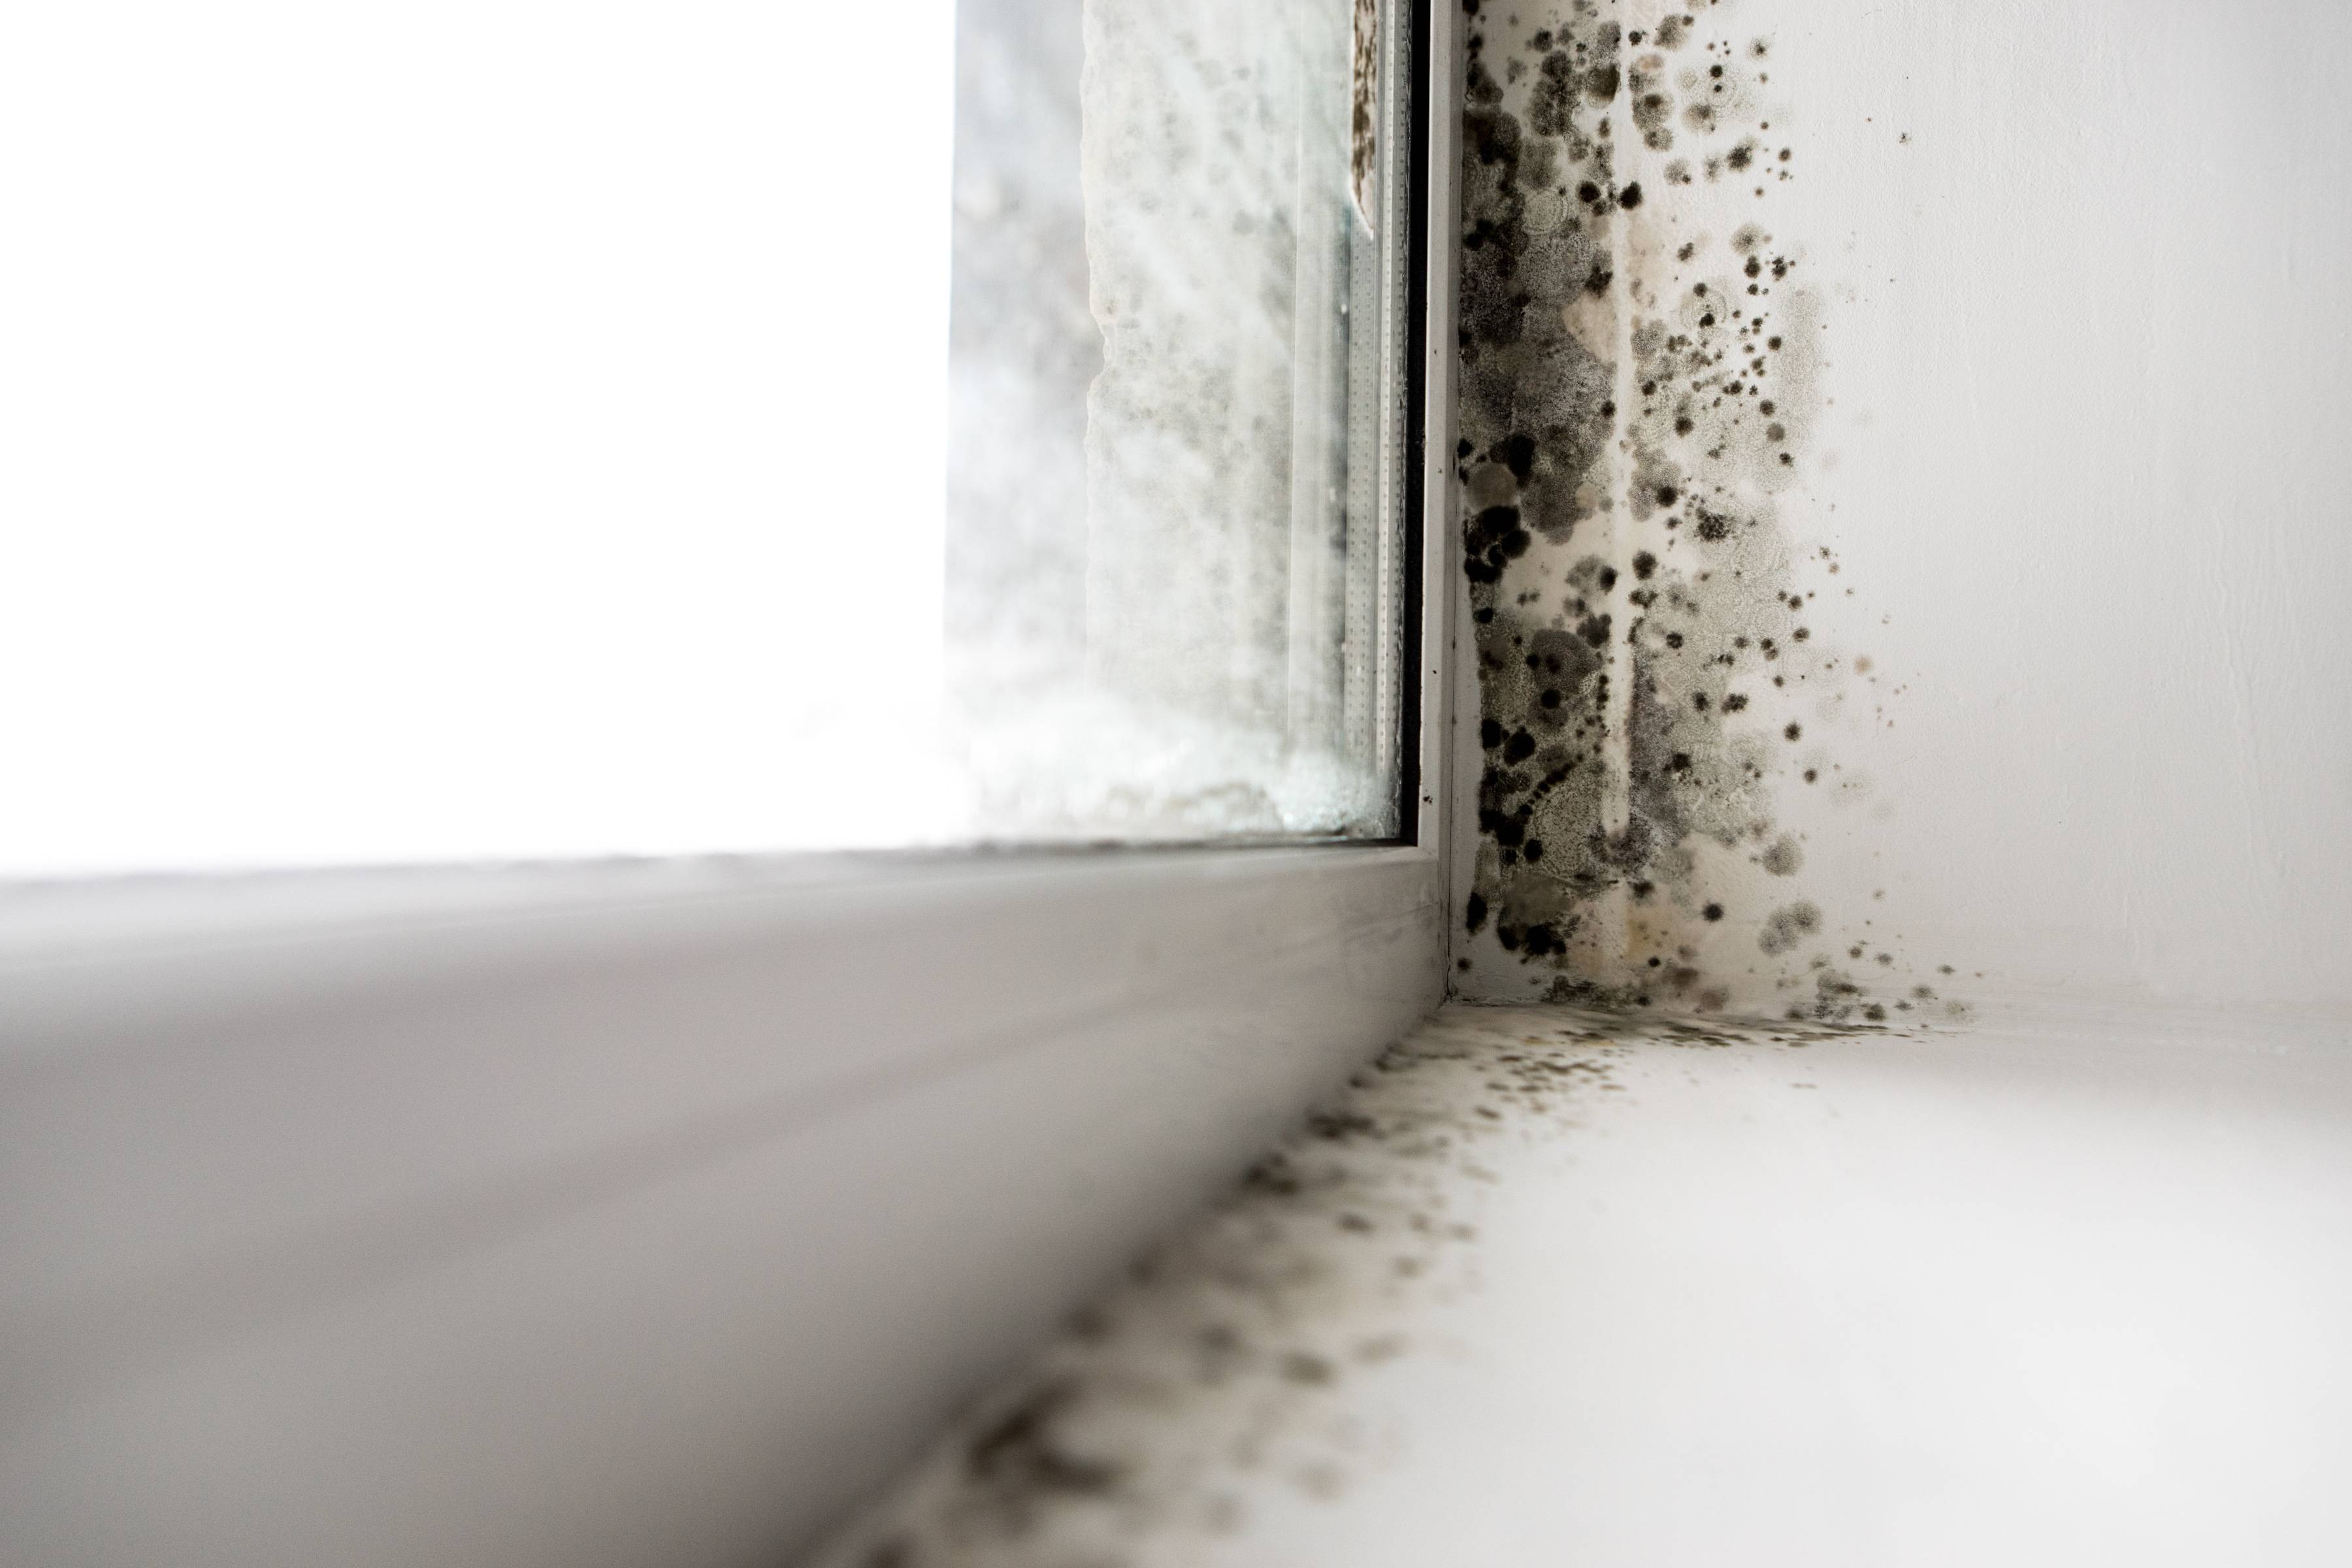 Как избавиться от плесени на окнах, подоконниках и откосах в домашних условиях